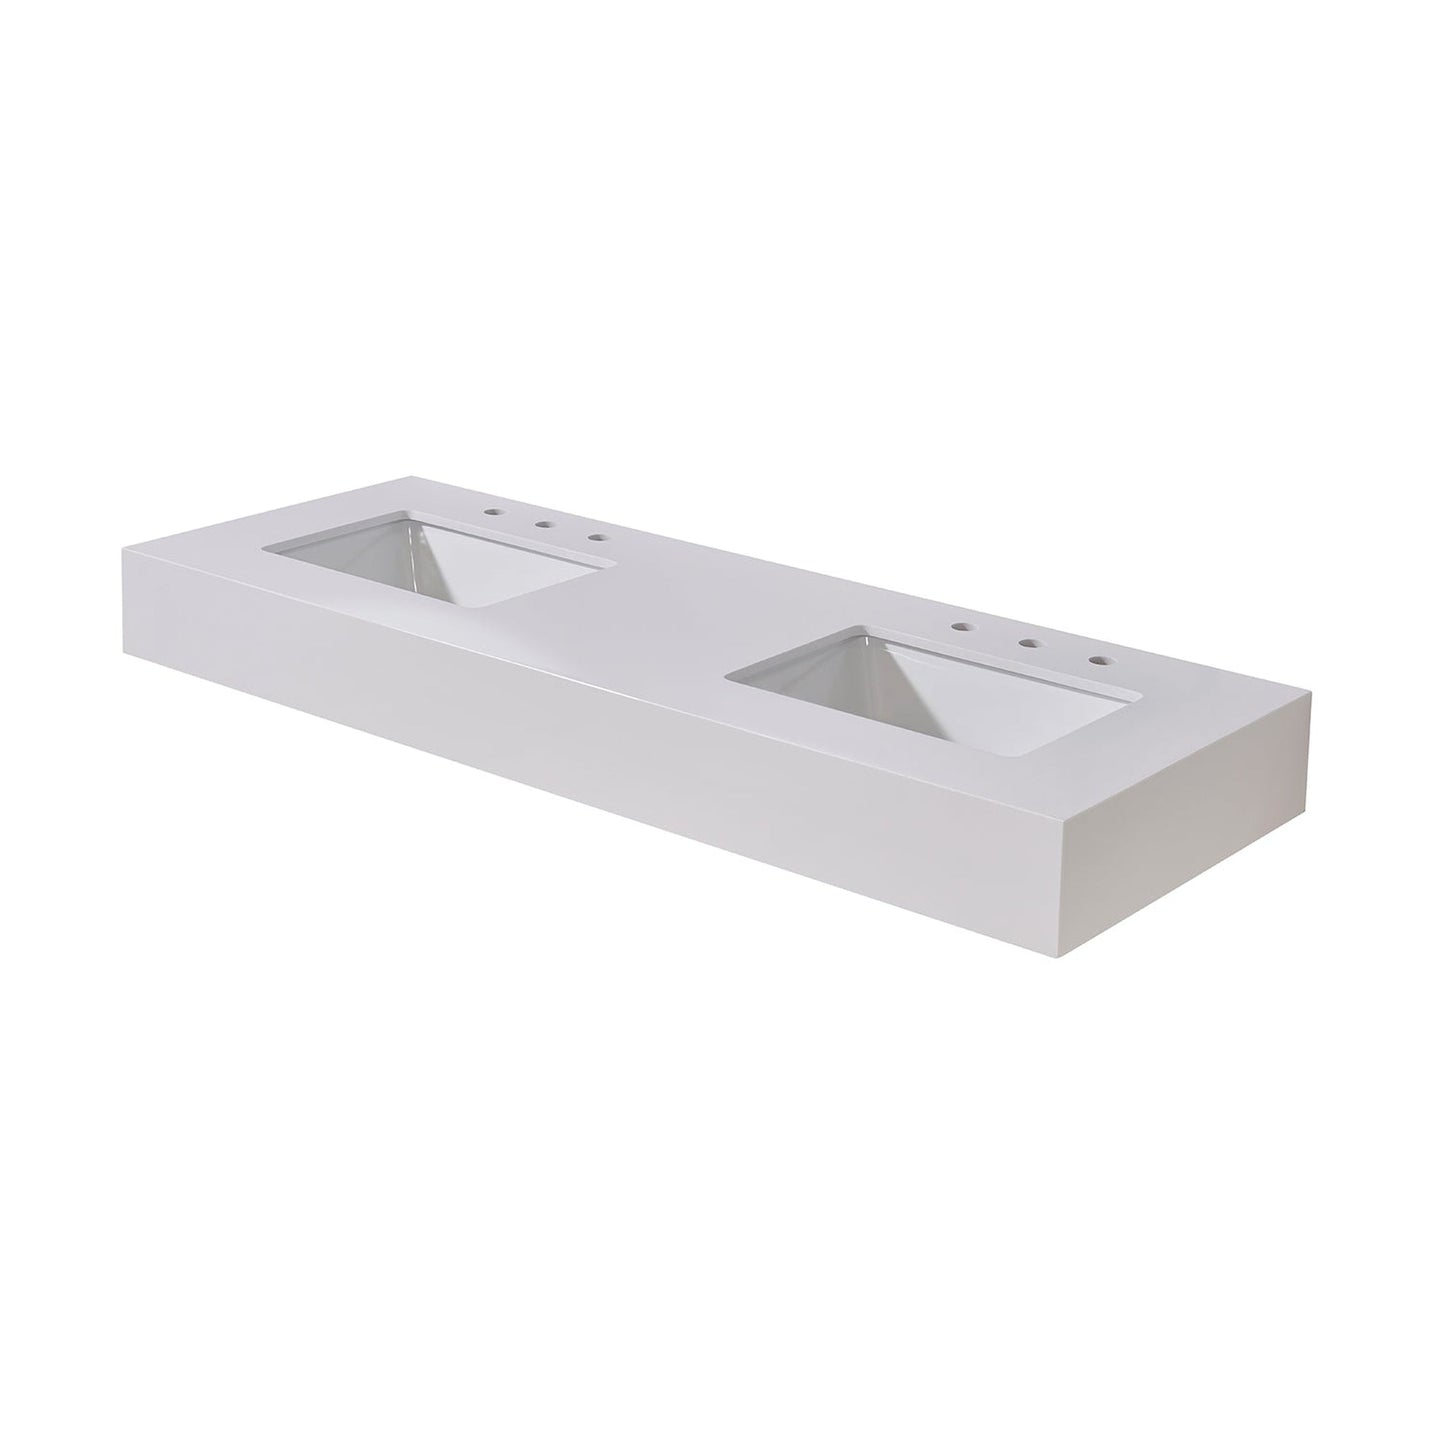 Altair Edolo 60" x 22" Snow White Apron Composite Stone Bathroom Vanity Top With White SInk